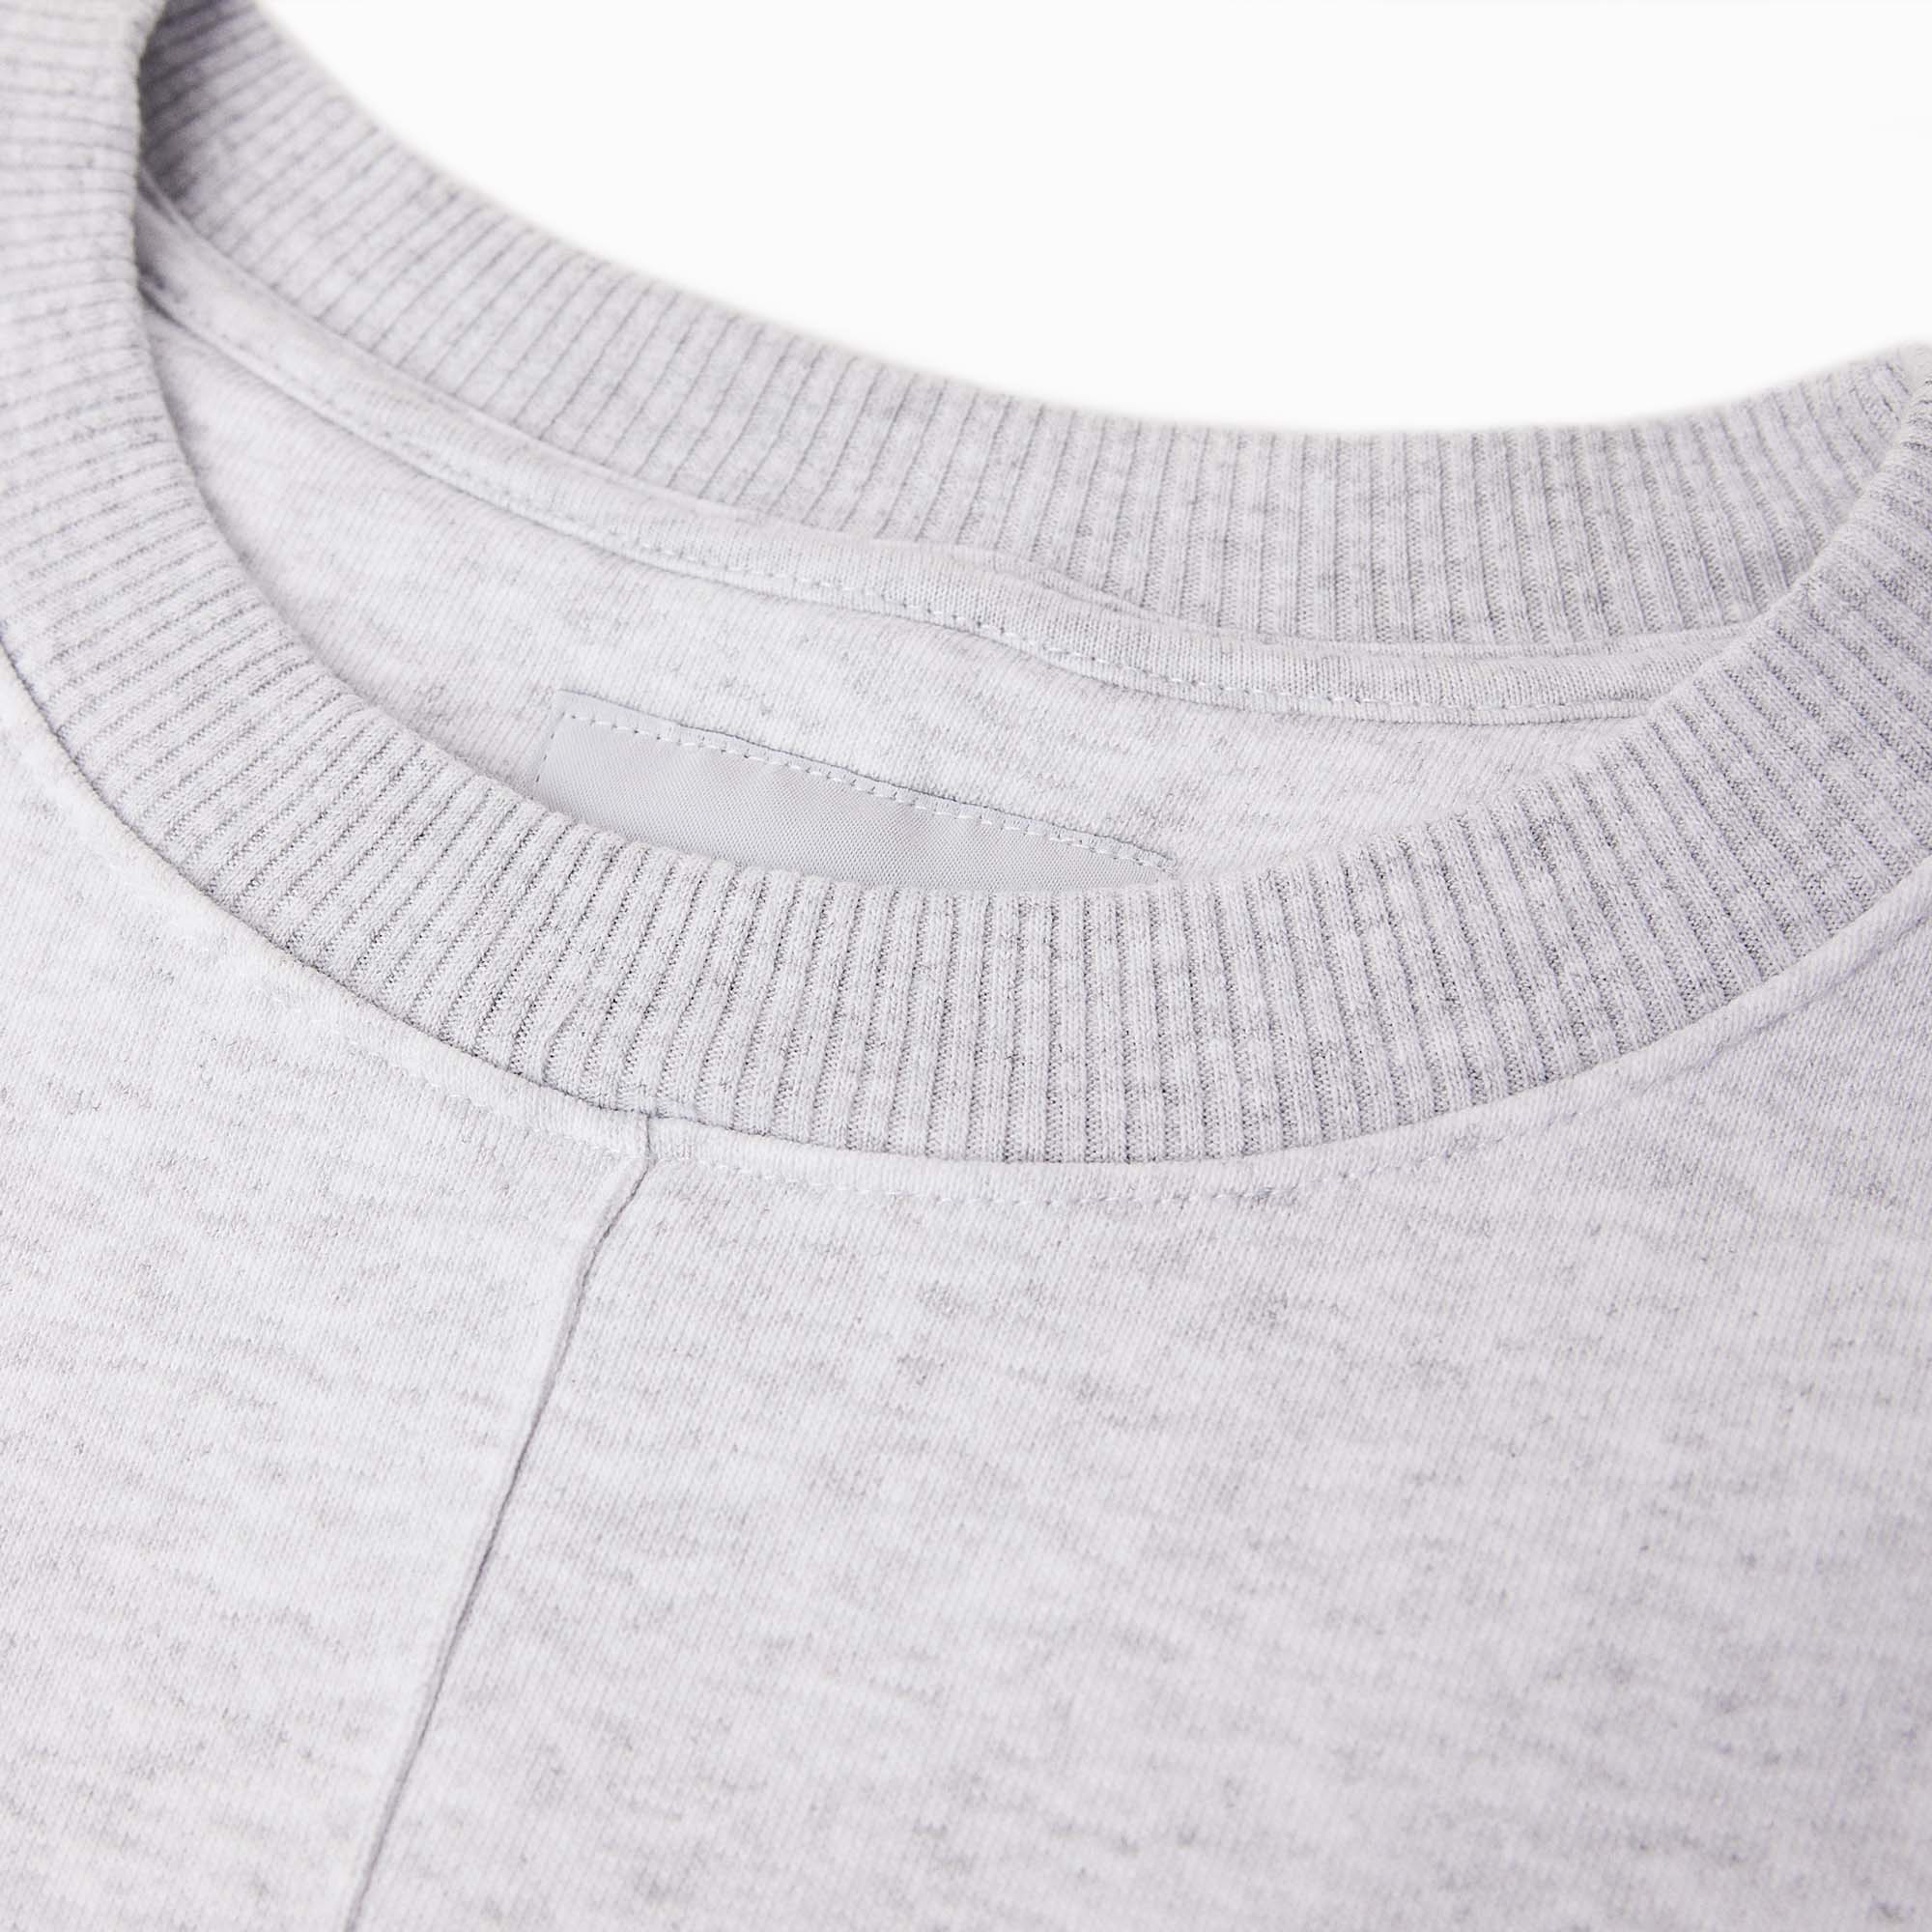 USA sweatshirt / ash heather grey